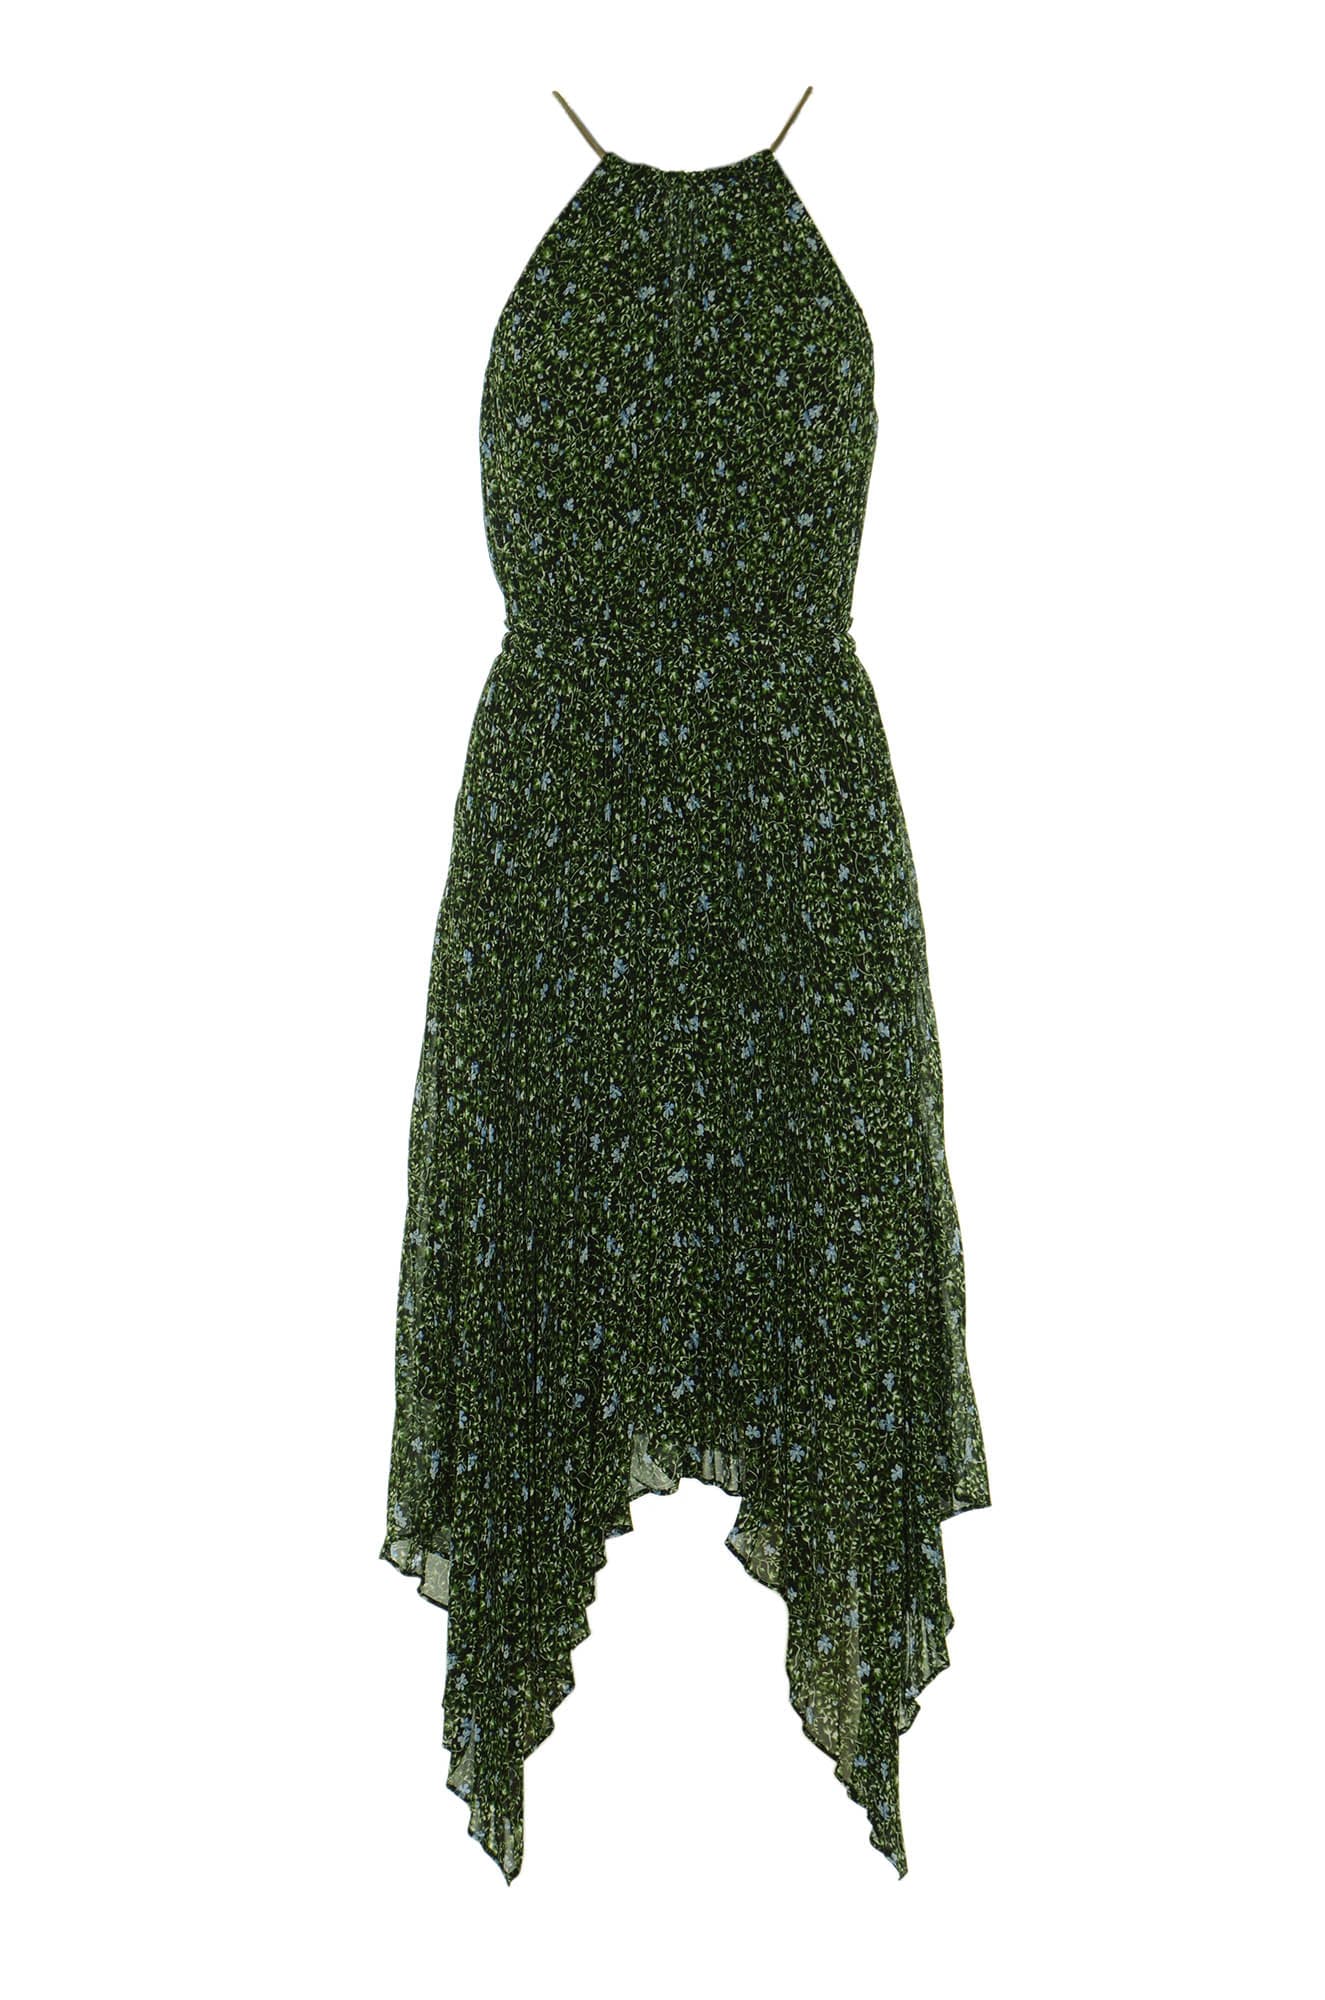 Michael Kors Asymmetric Floral Dress